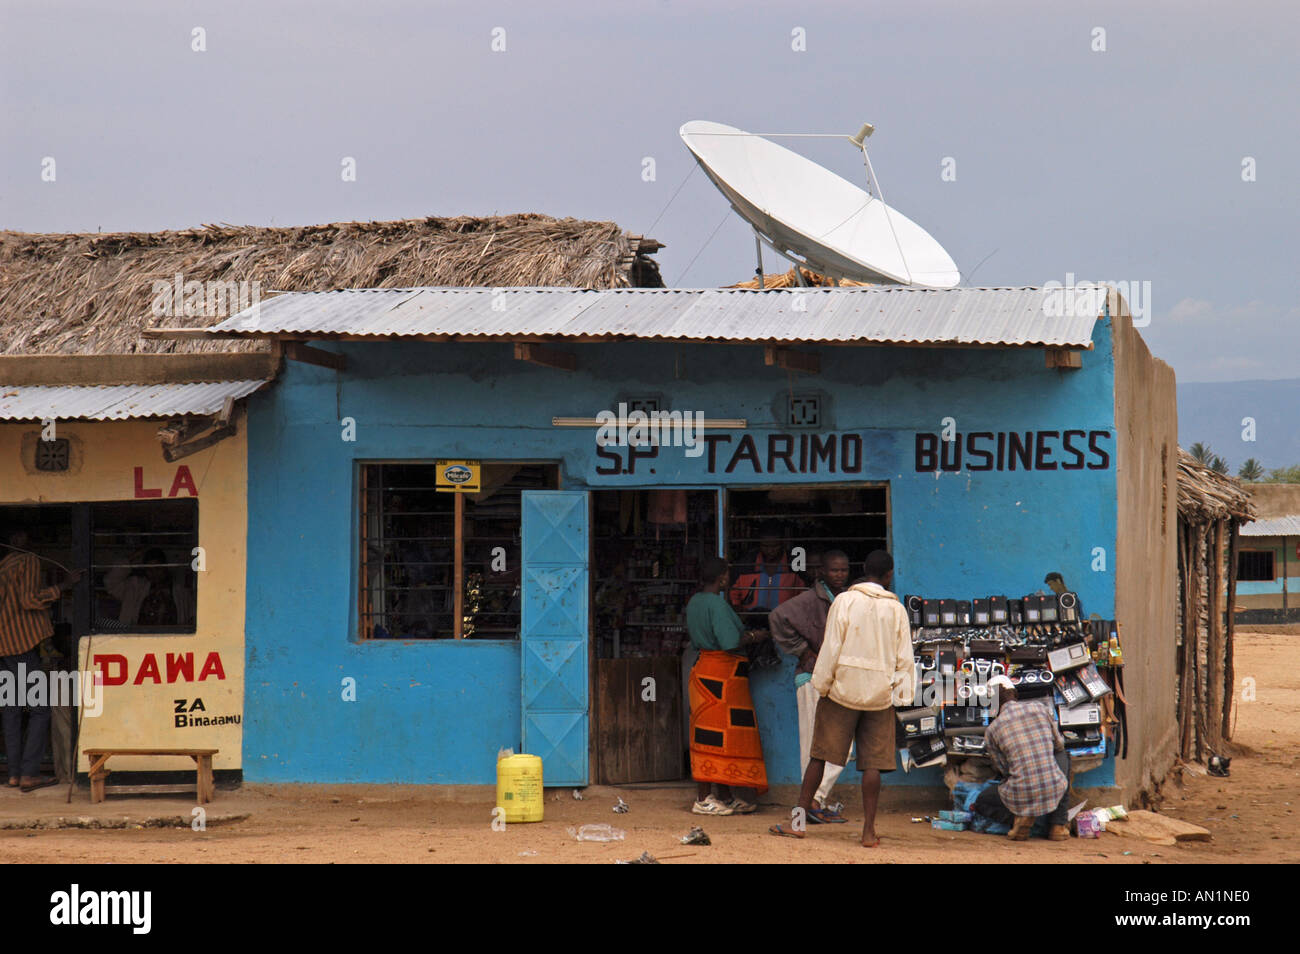 Shop with satellite dish in the rural area of Lake Eyasi, Manyara region, Tanzania Stock Photo